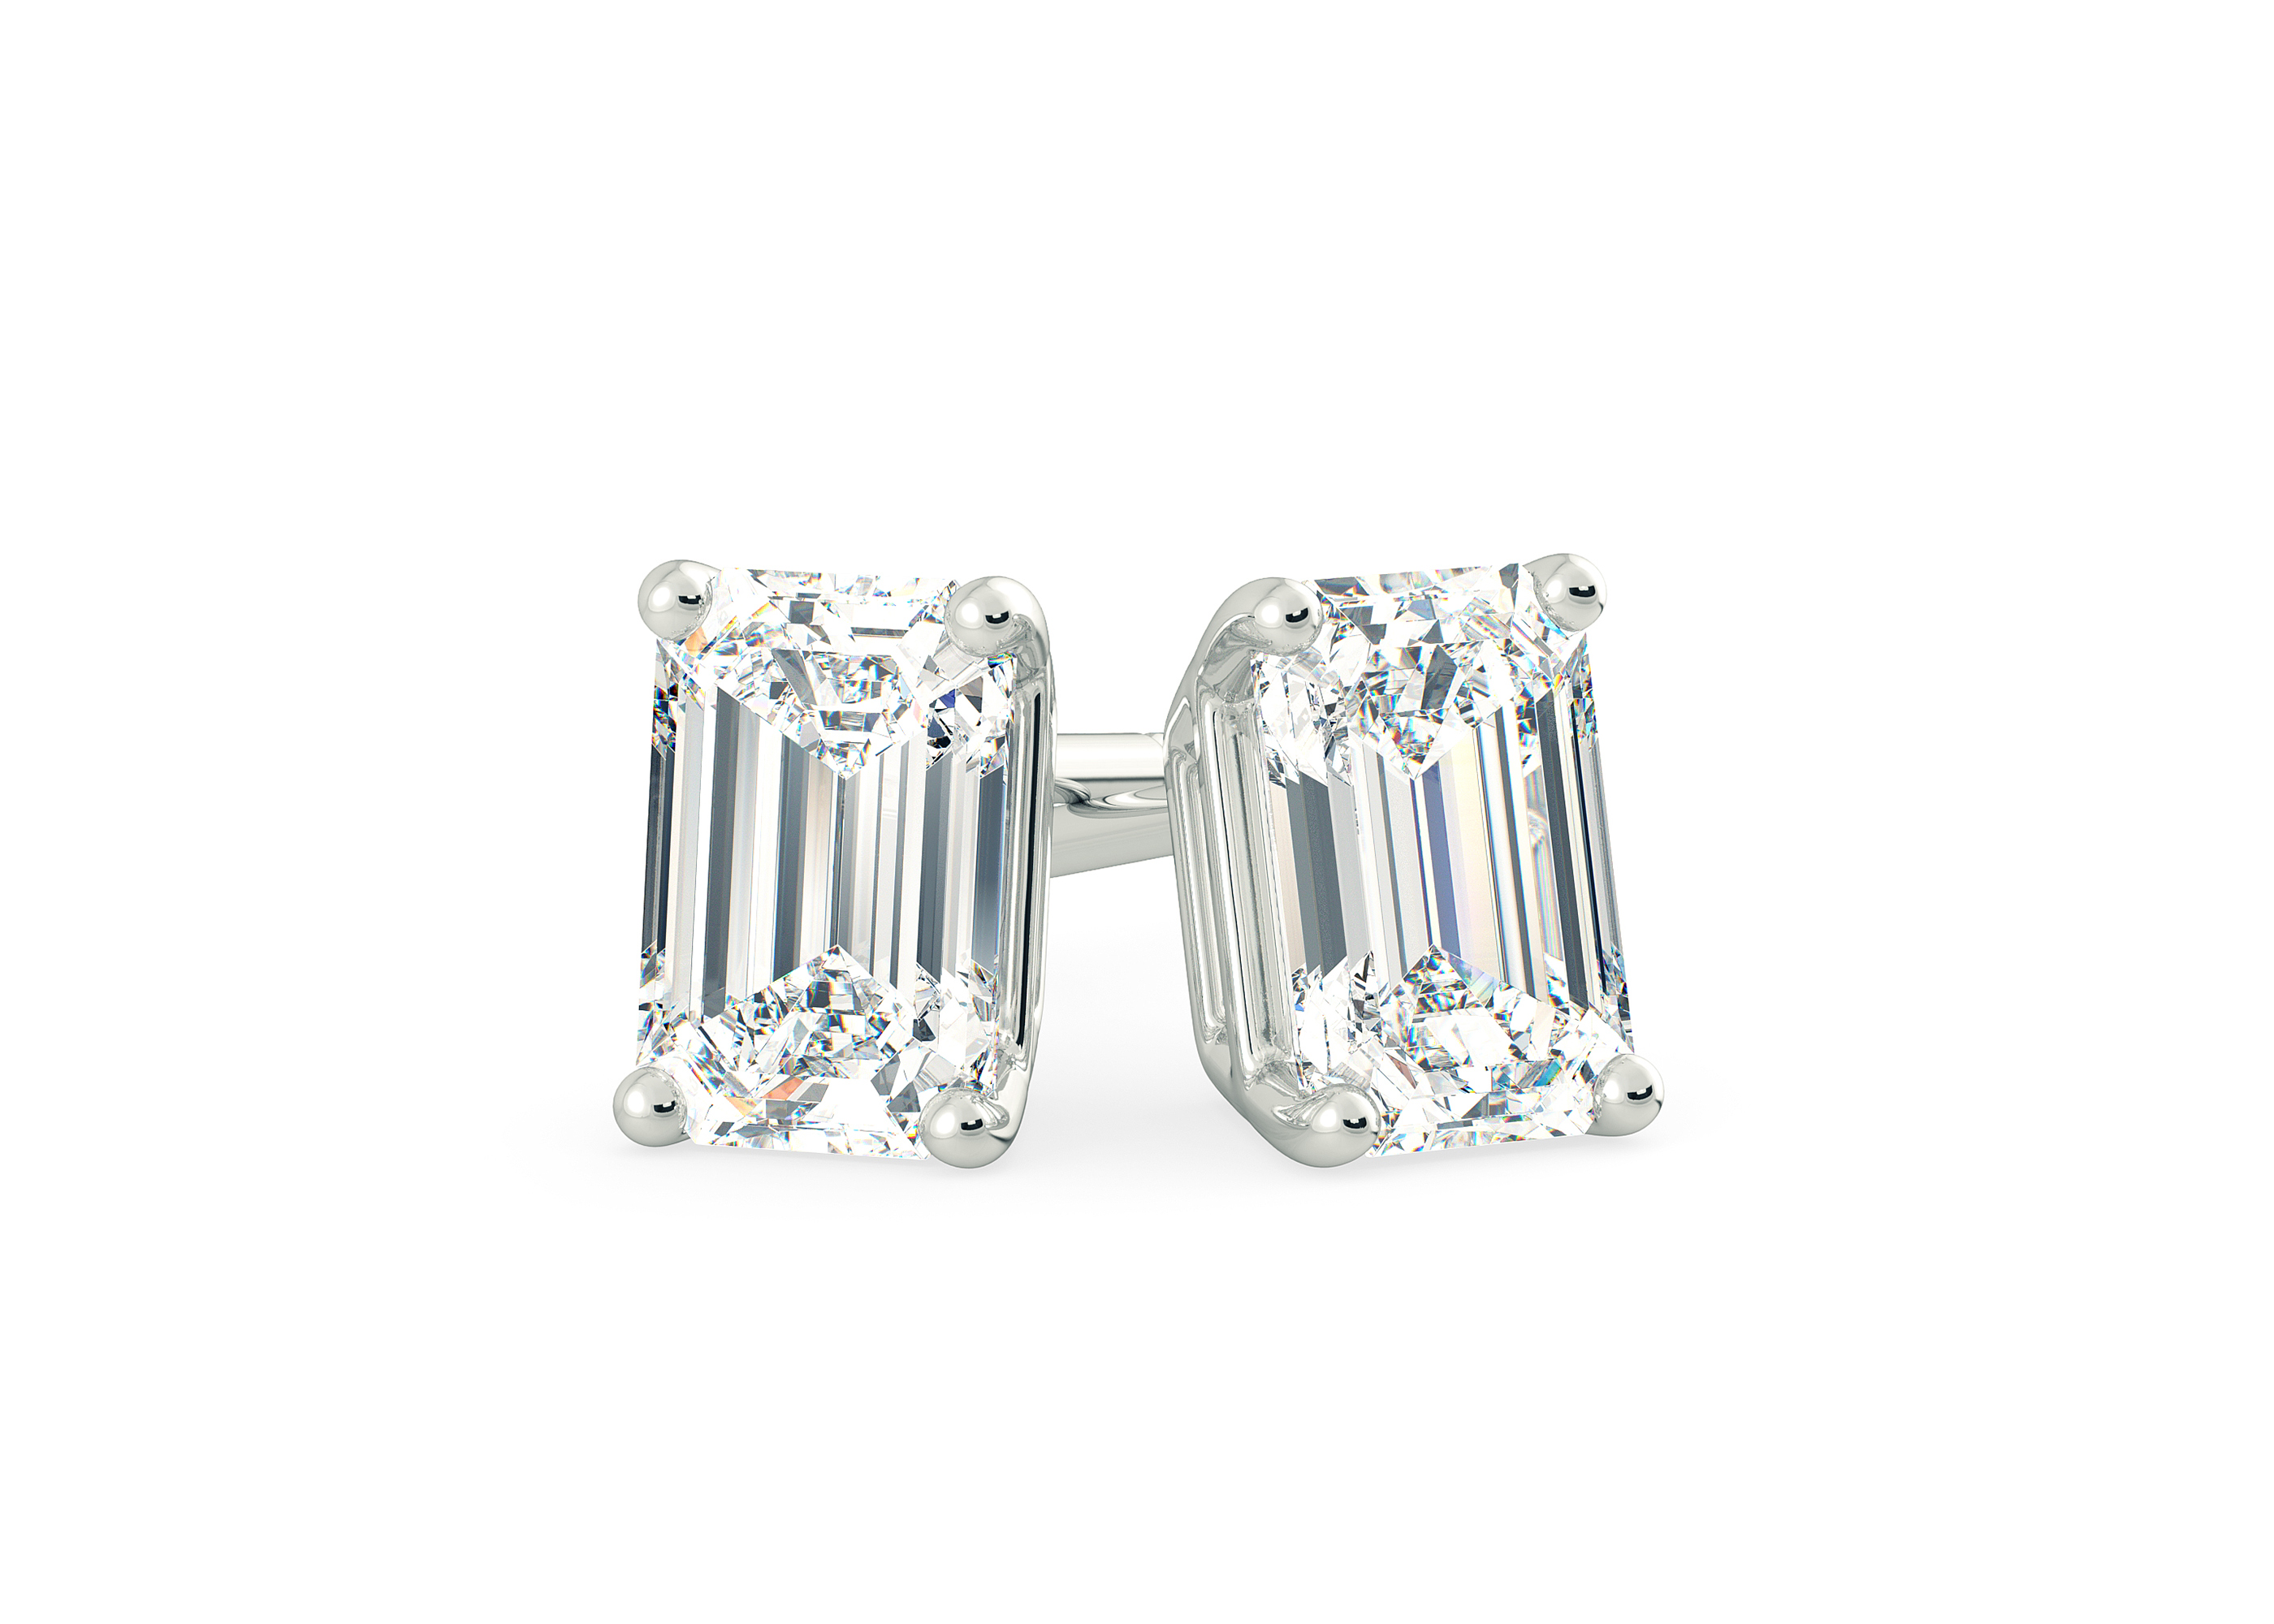 Two Carat Lab Grown Emerald Diamond Stud Earrings in 9K White Gold